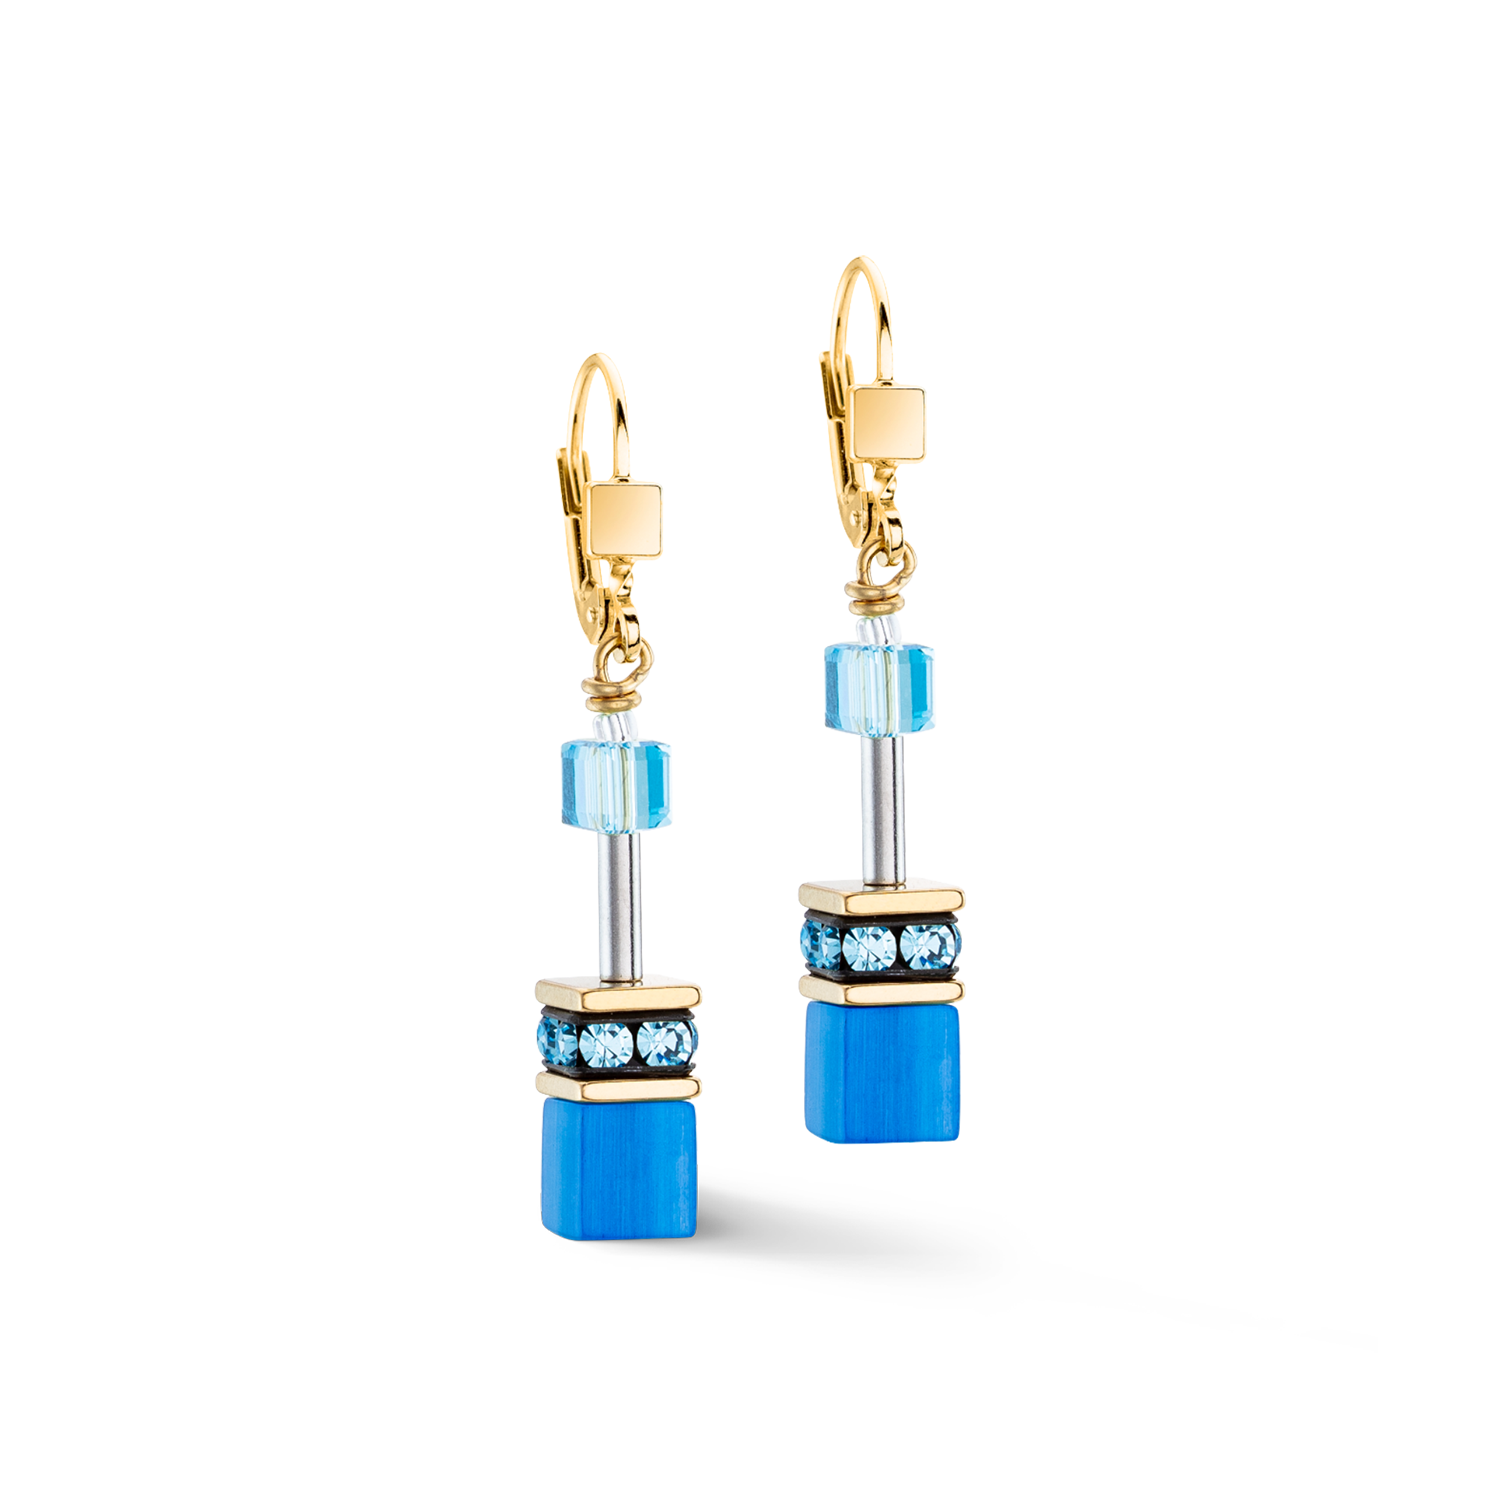 GeoCUBE® Iconic Mono Gold earrings turquoise